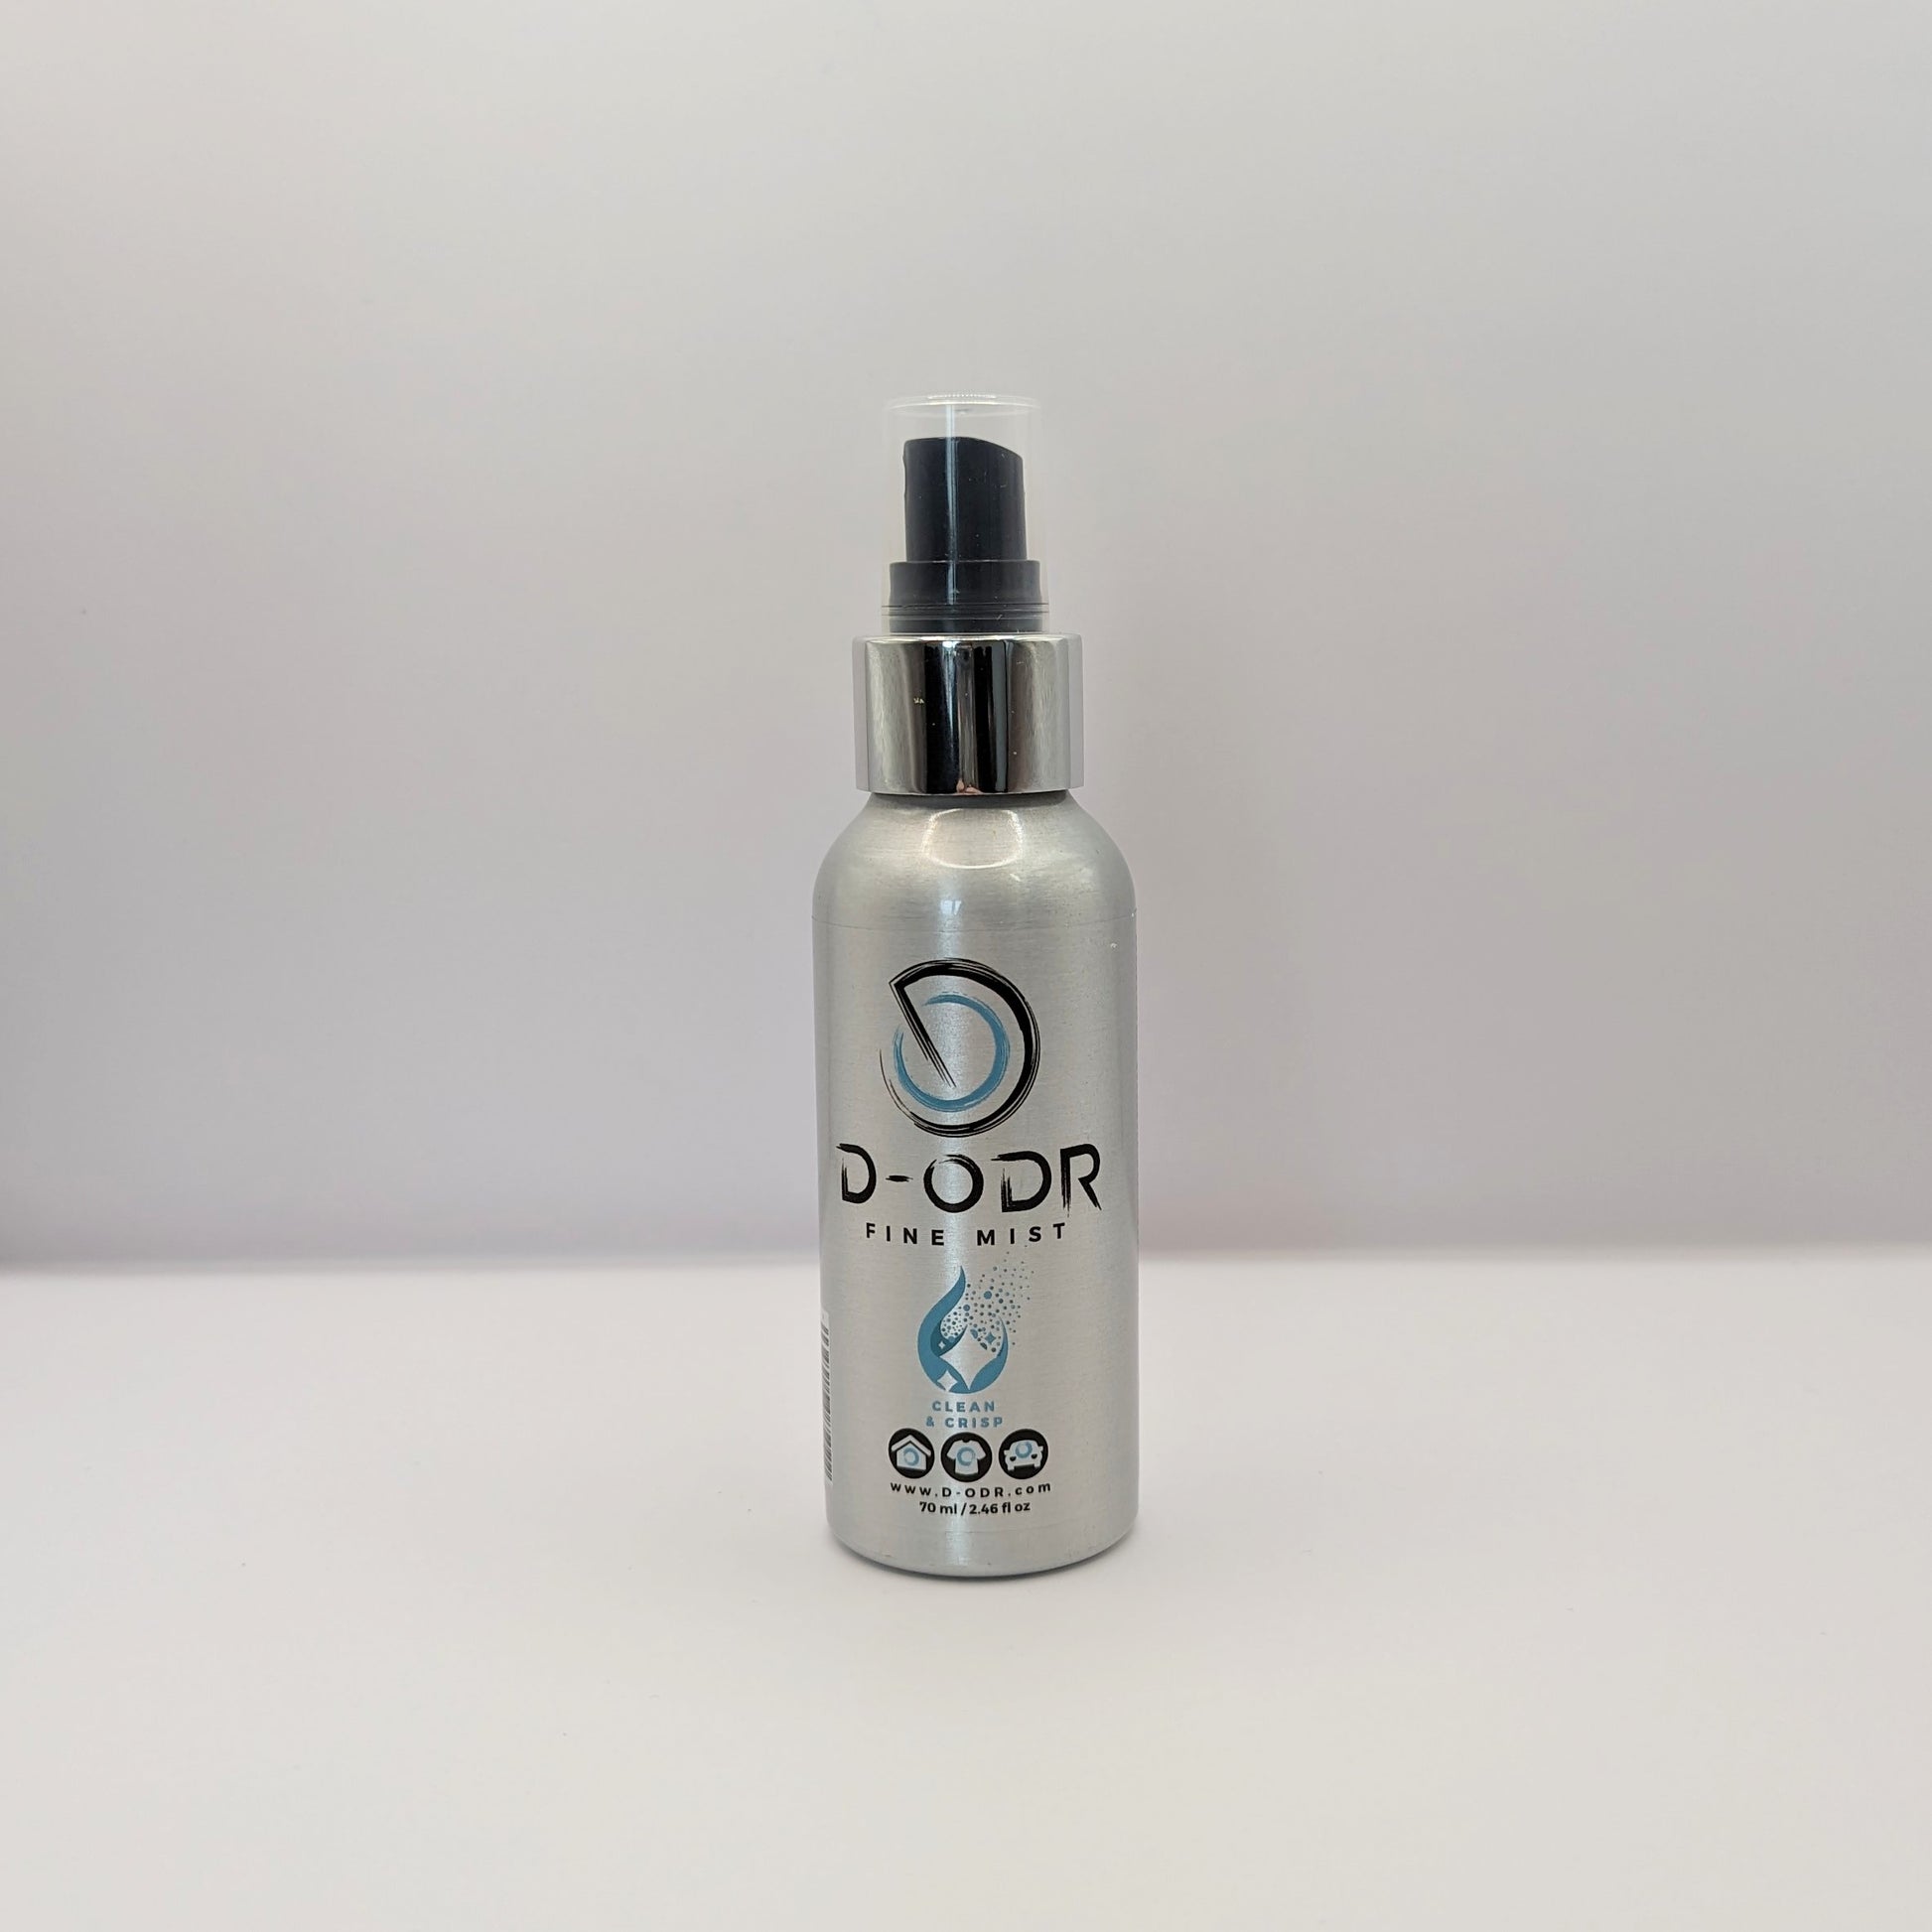 D-ODR Room Fresheners - 4 Fragrances - Ethical Supplies